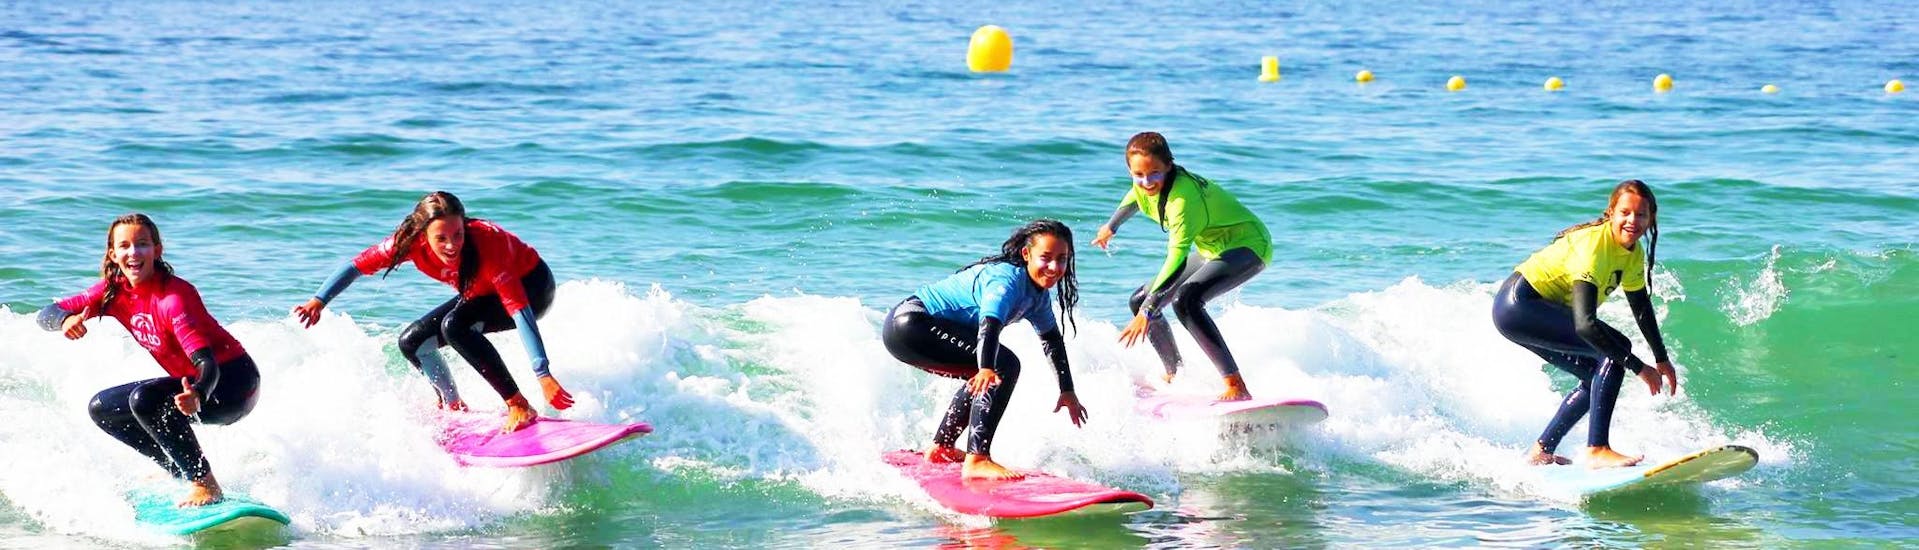 A group of surfers enjoy their successful Surfing Lessons at Playa Grande de Bastiagueiro , organized by Prado Surf.